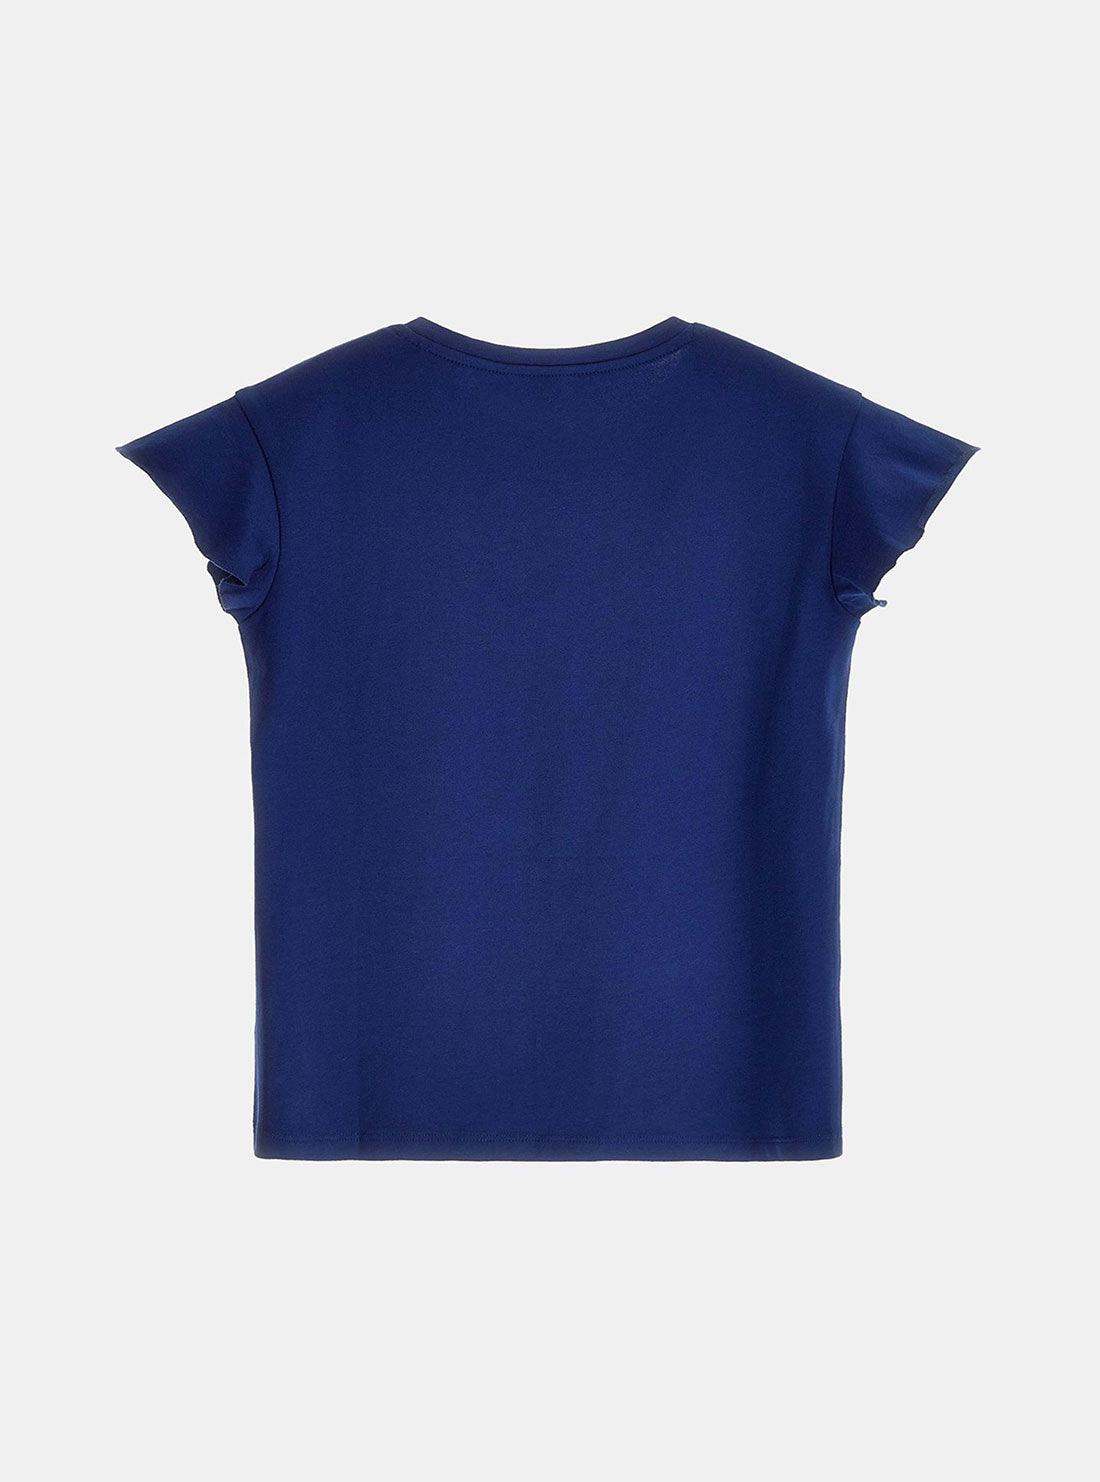 Blue Logo Short Sleeve T-Shirt (7-16) back view